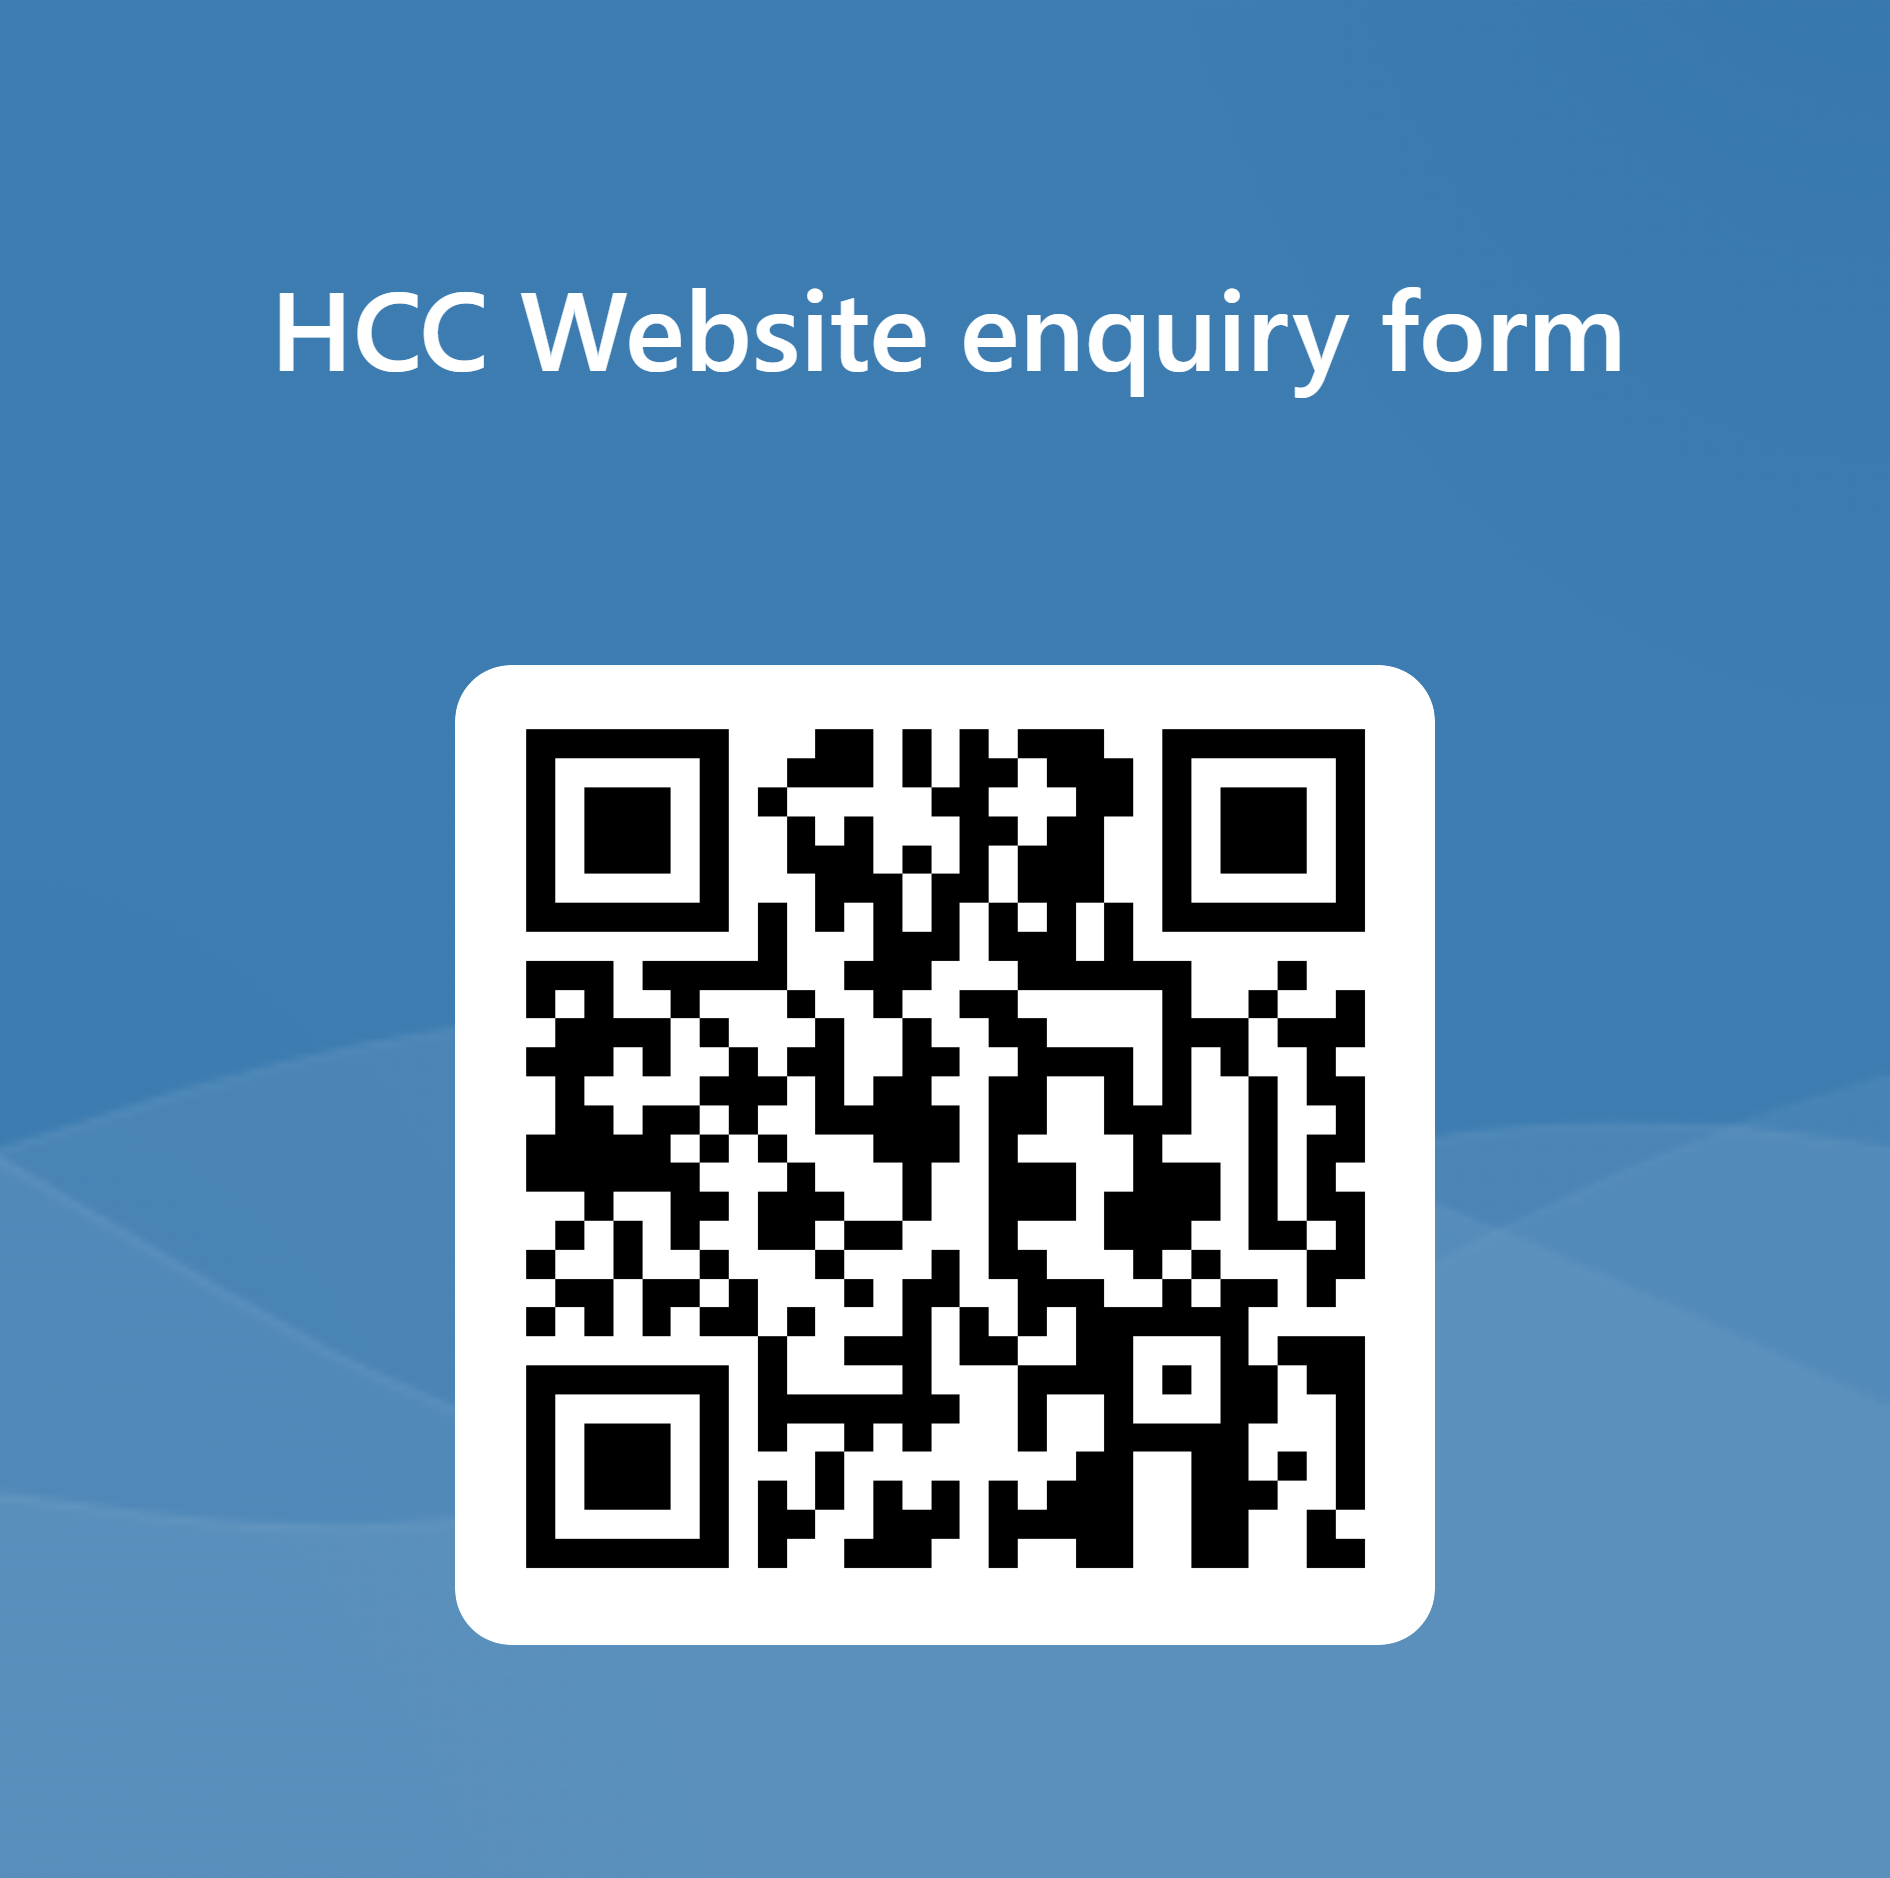 HCC-website-enquiry-form